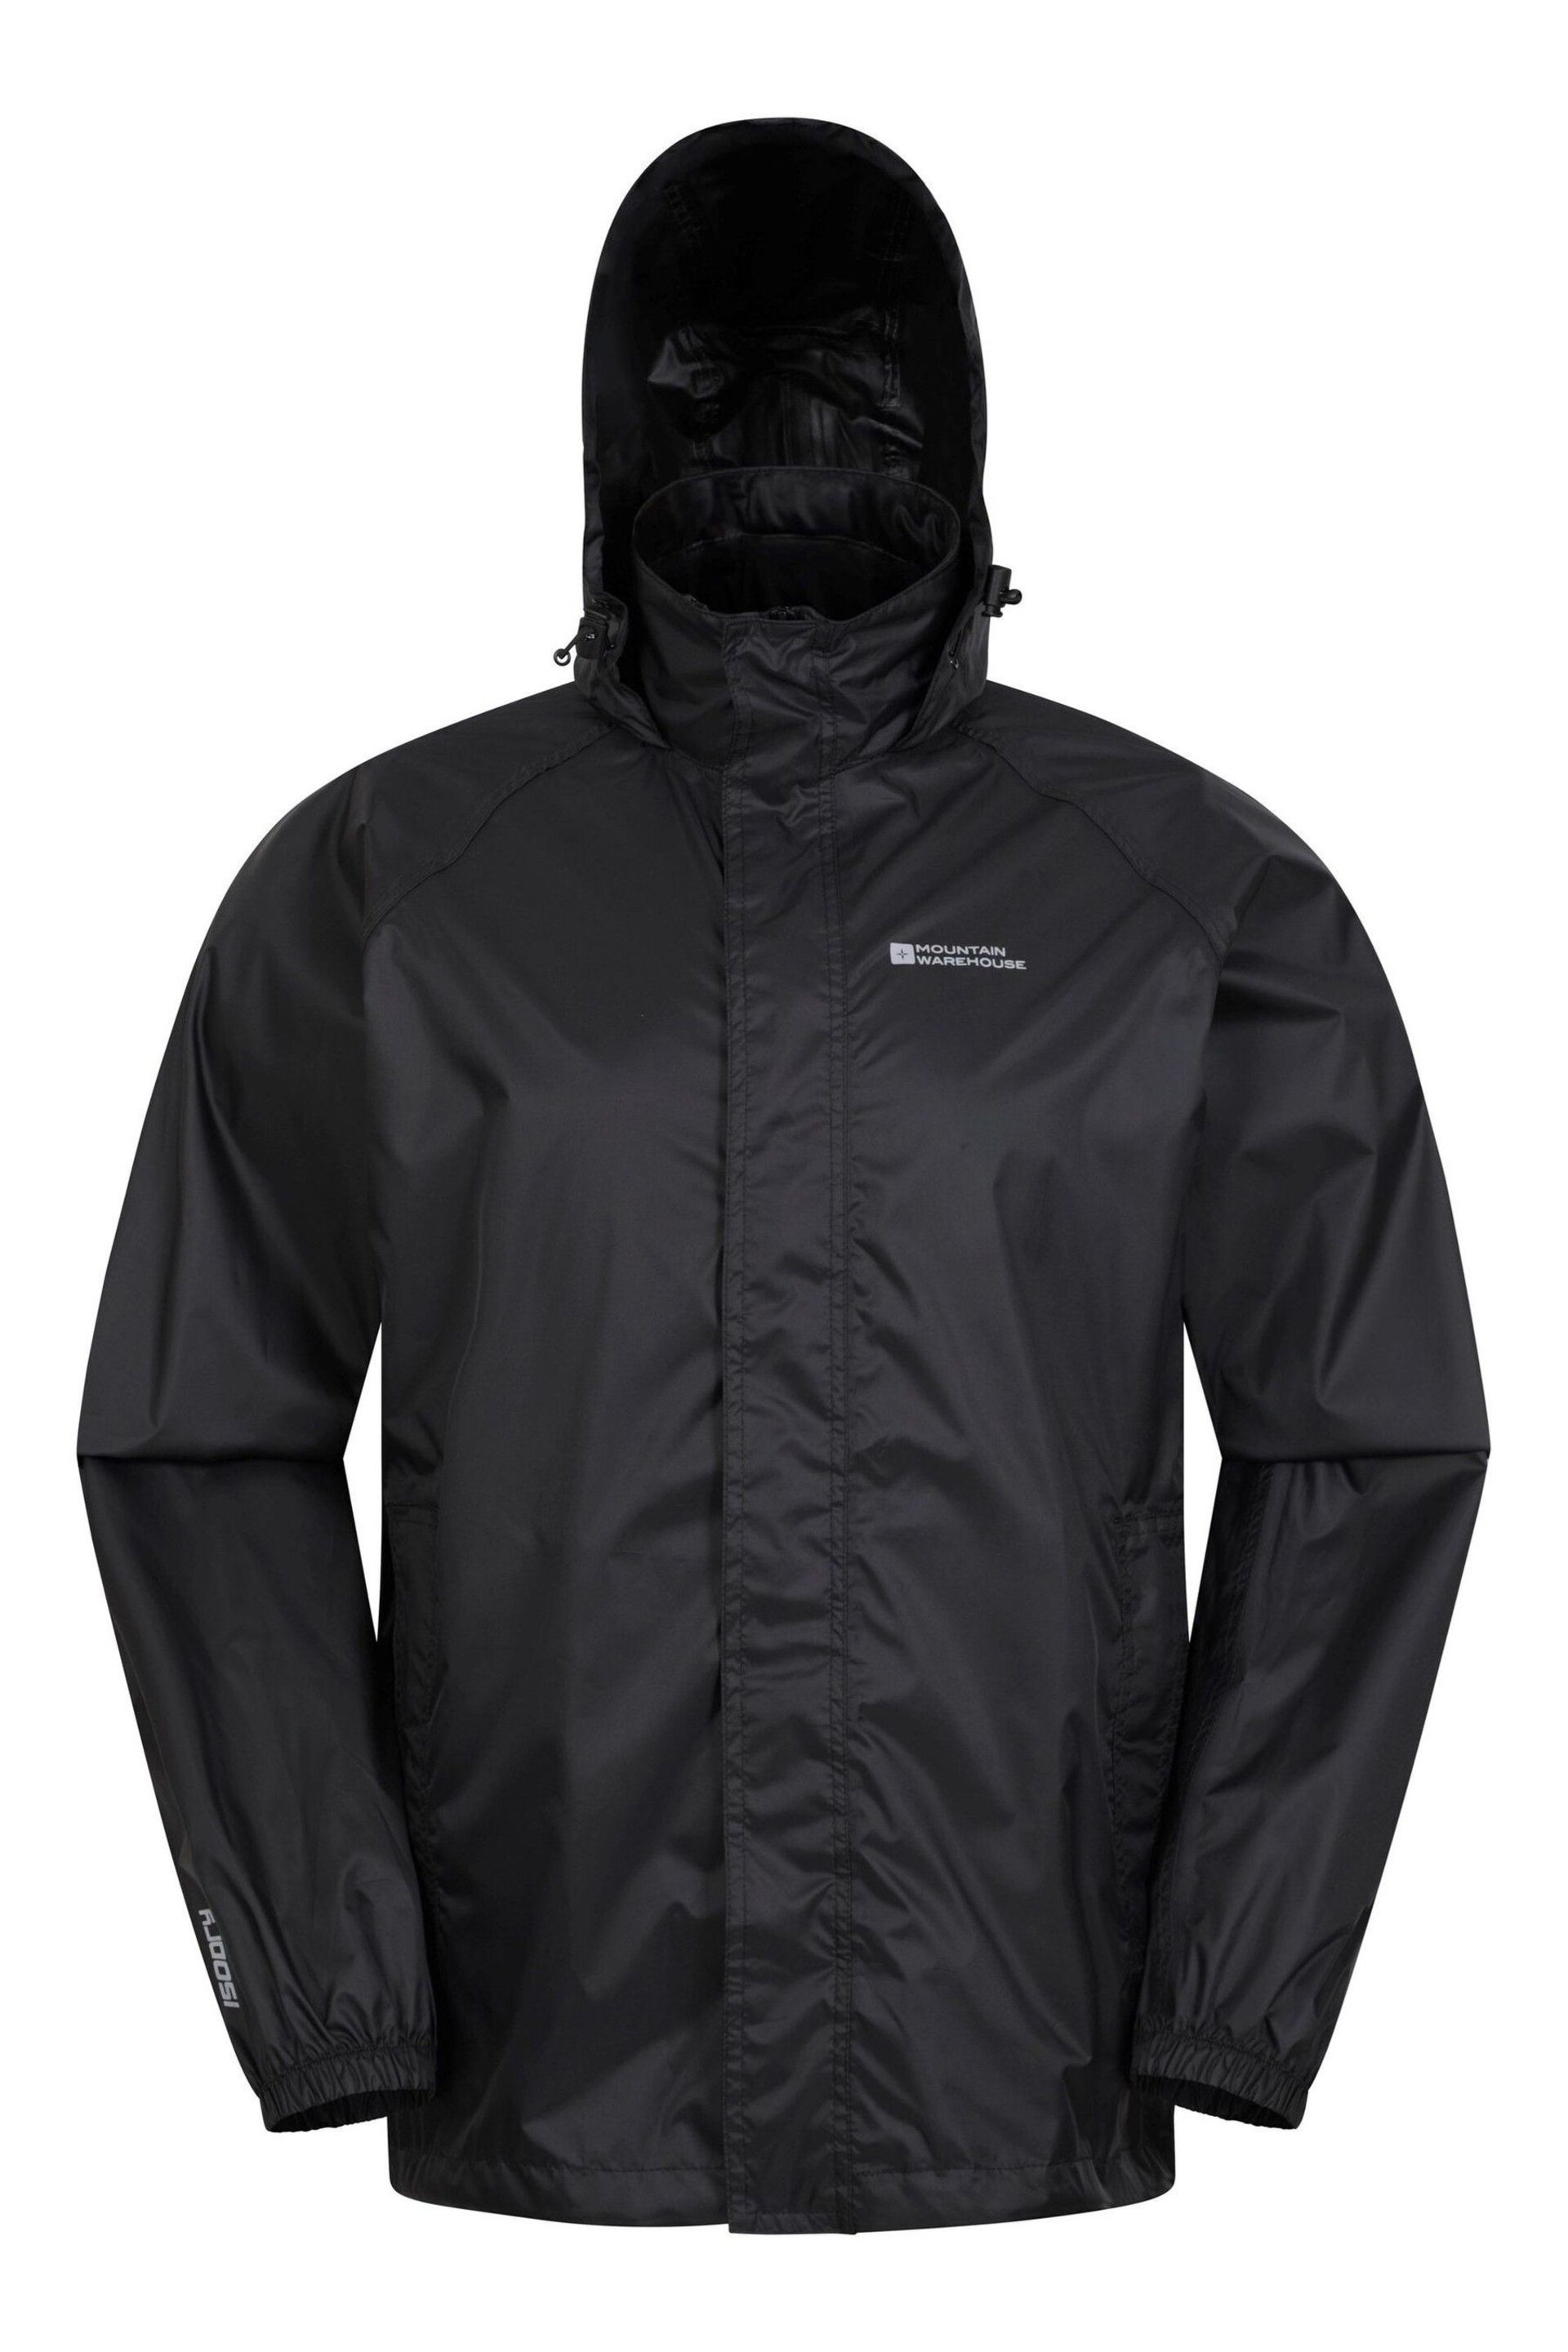 Mountain Warehouse Black Mens Pakka Waterproof Jacket - Image 1 of 5